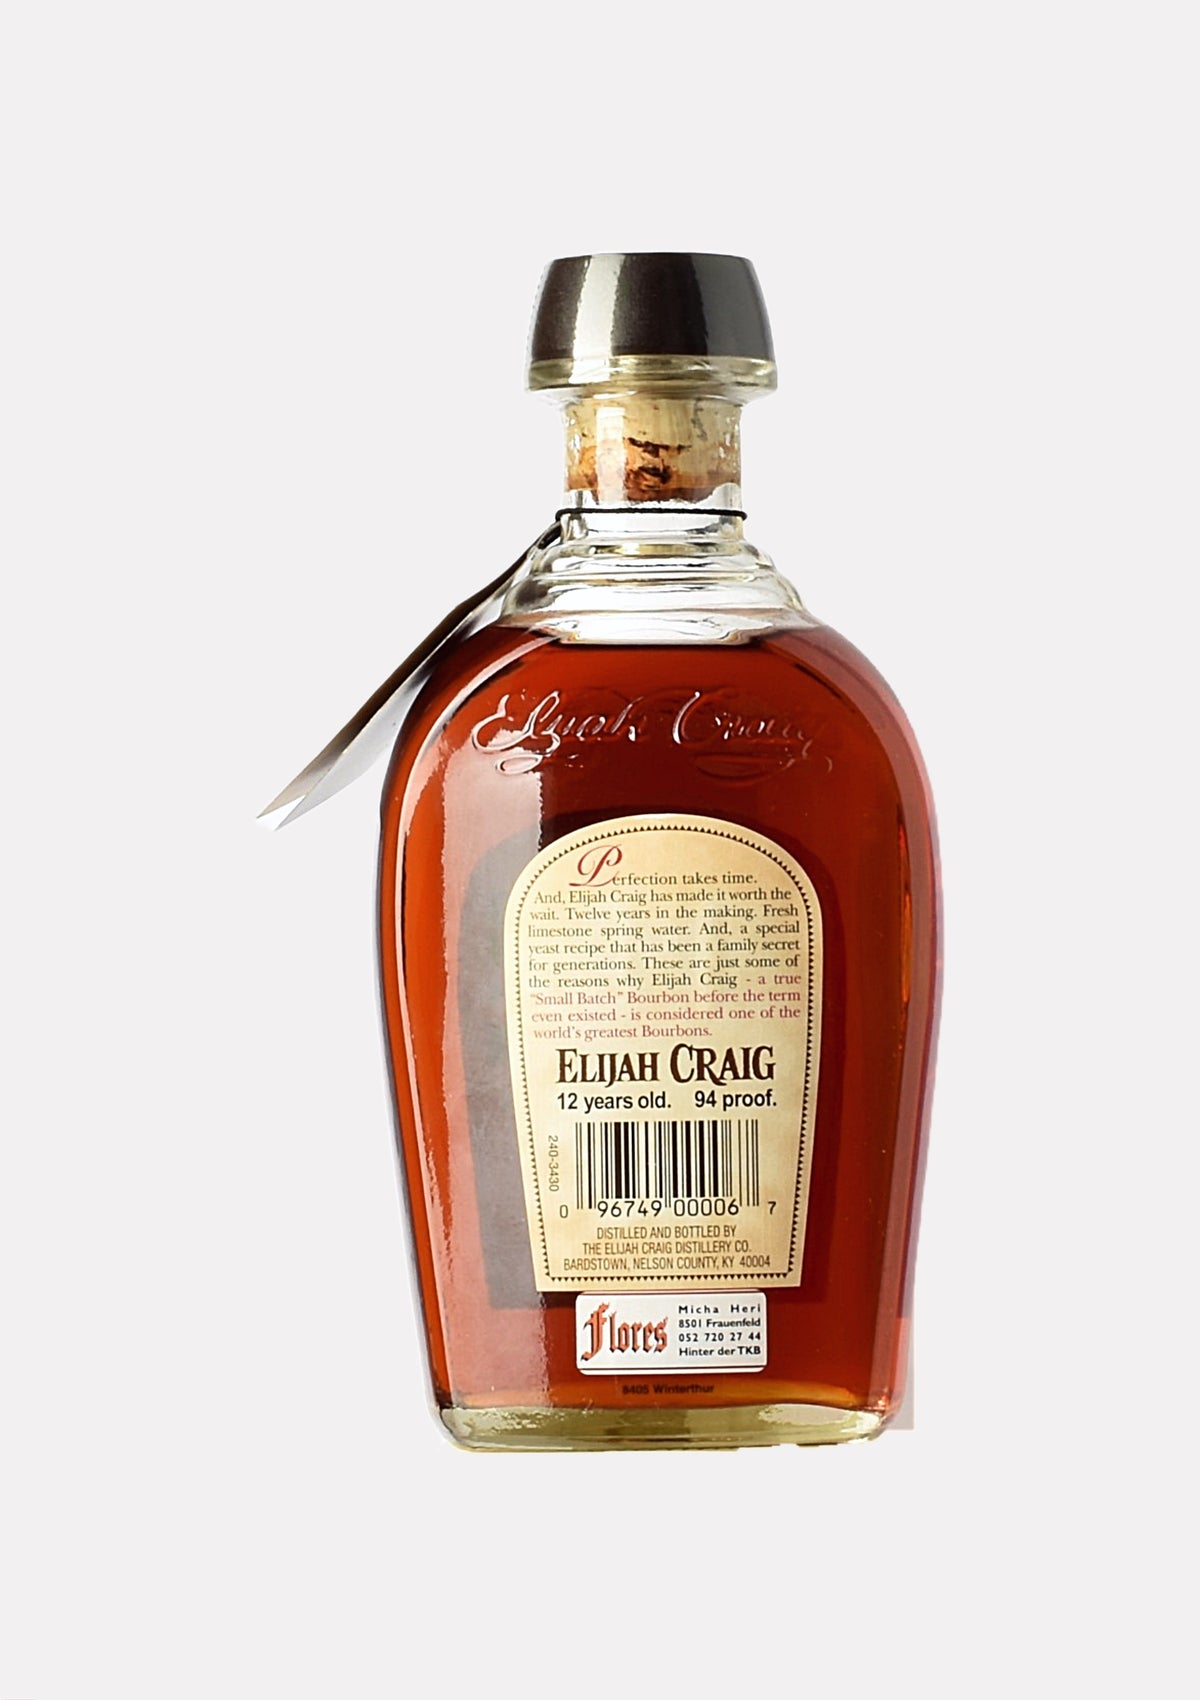 Elijah Craig Kentucky Straight Bourbon Whiskey 12 Jahre